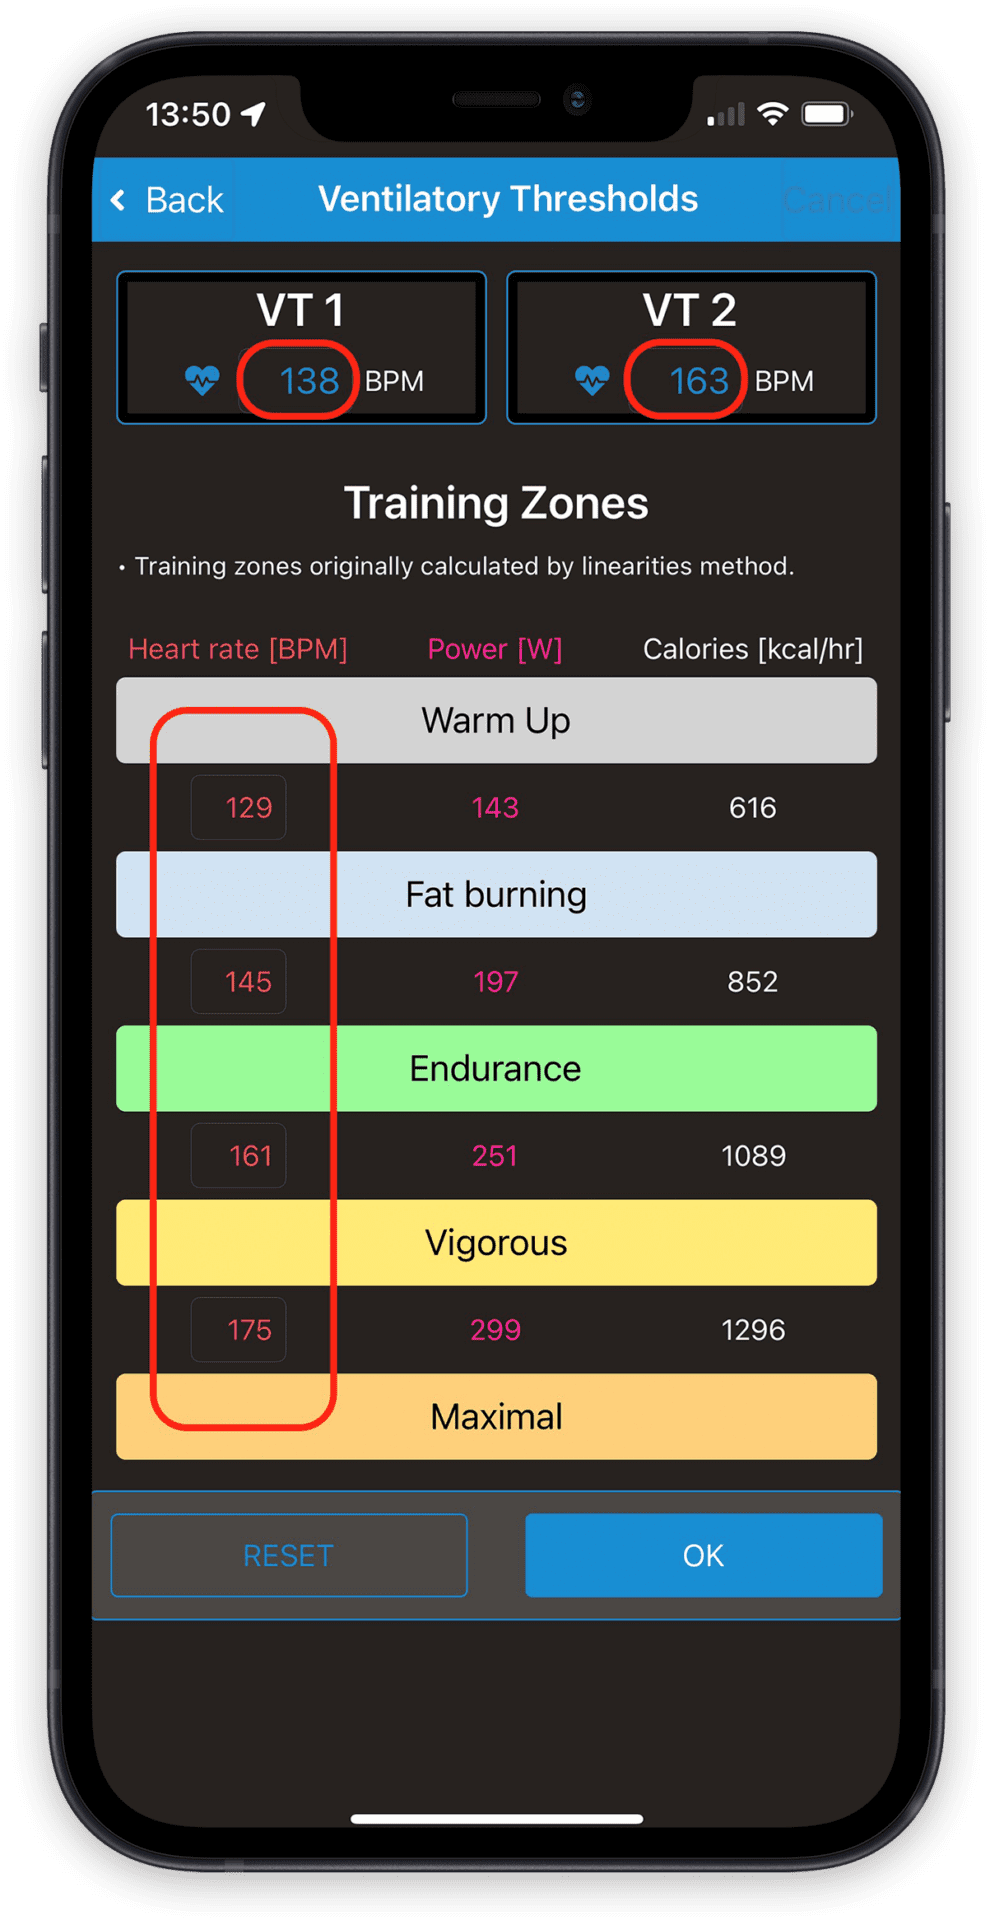 Identifying ventilatory thresholds (VT zones) on the mobile app